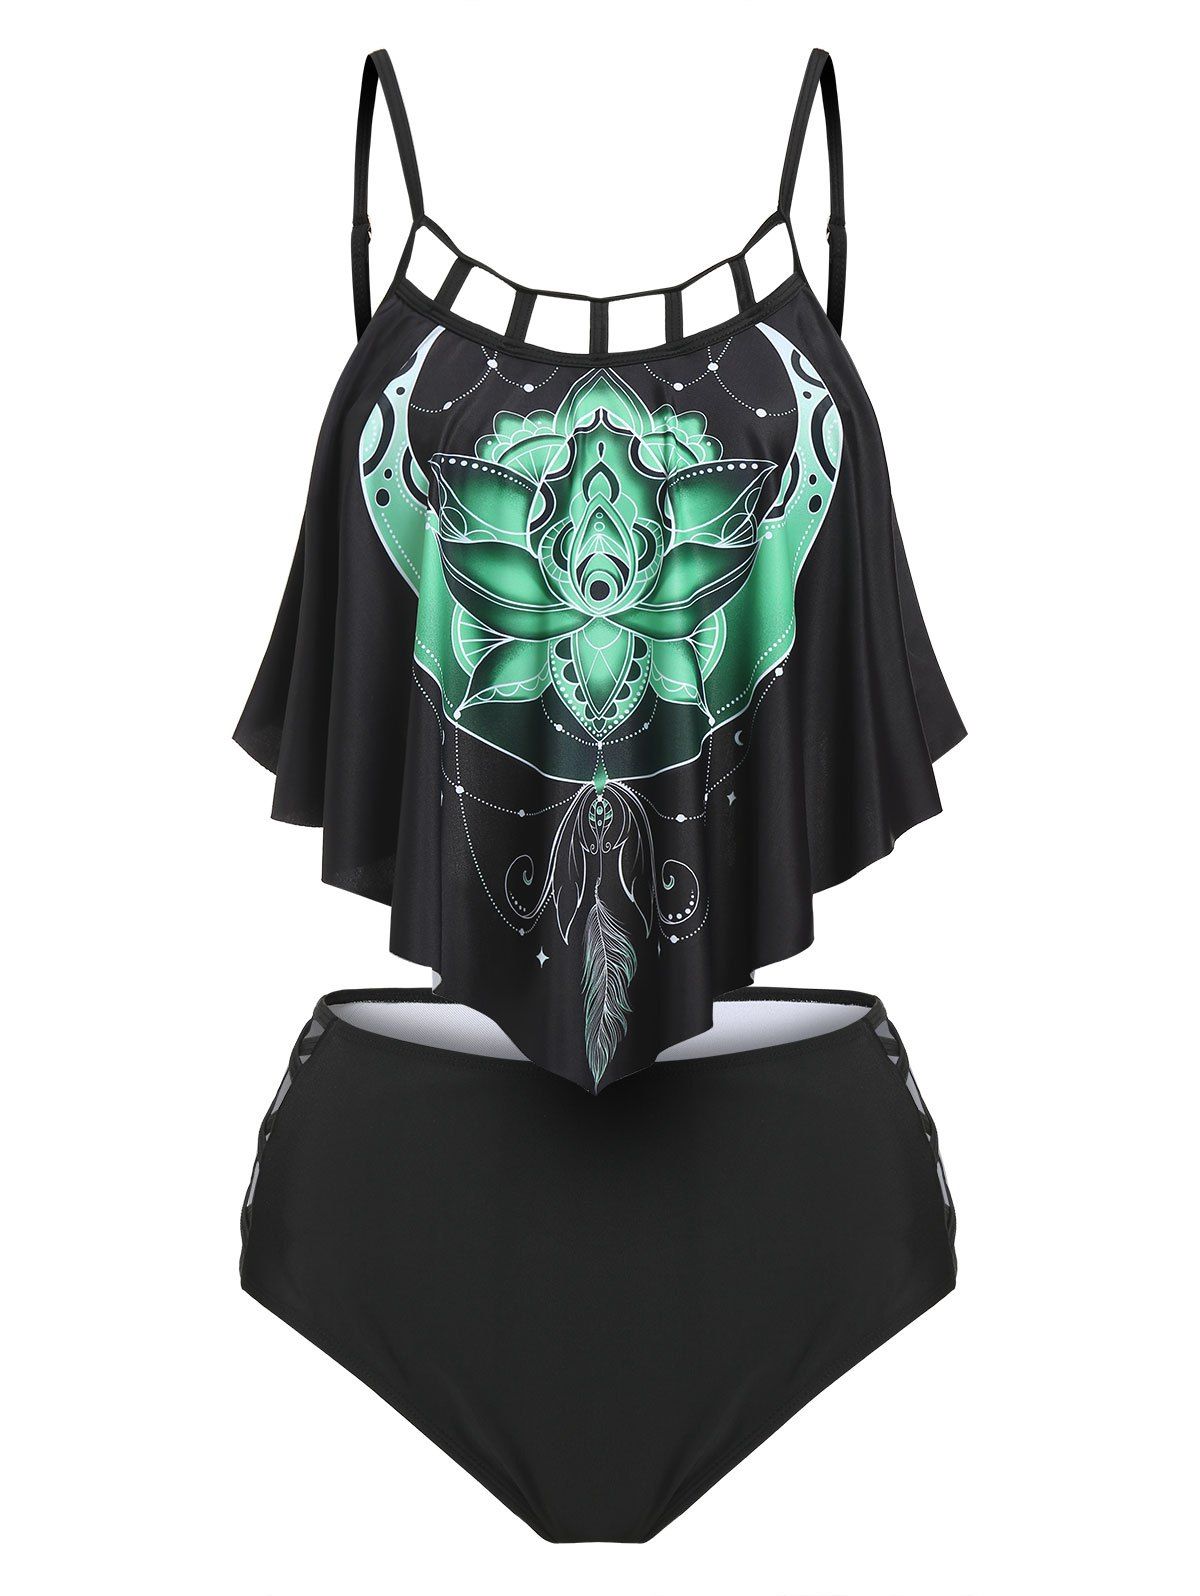 Bohemian Tankini Swimwear Tummy Control Swimsuit Flower Print Flounce Cutout High Rise Beach Bathing Suit - BLACK M